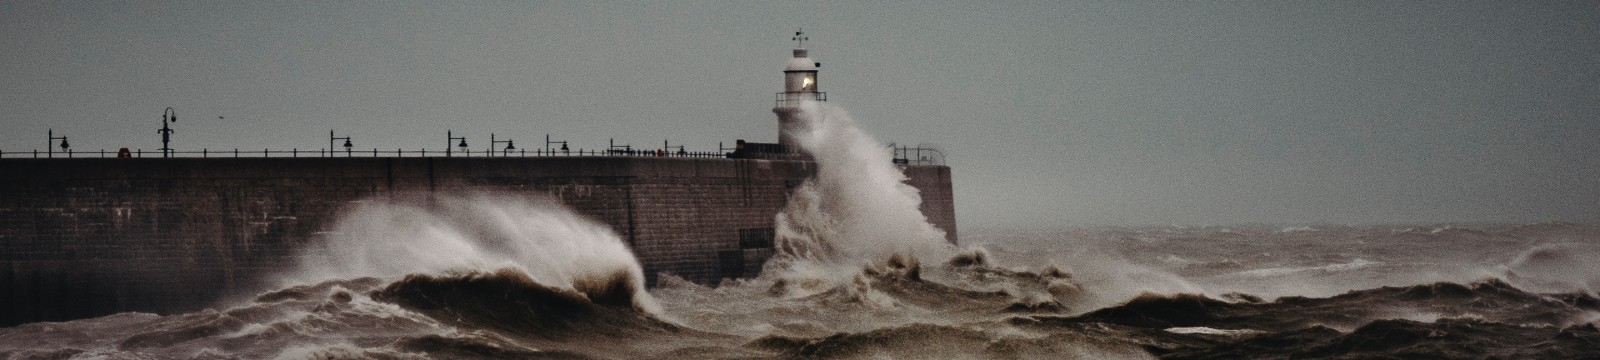 Waves hitting a lighthouse